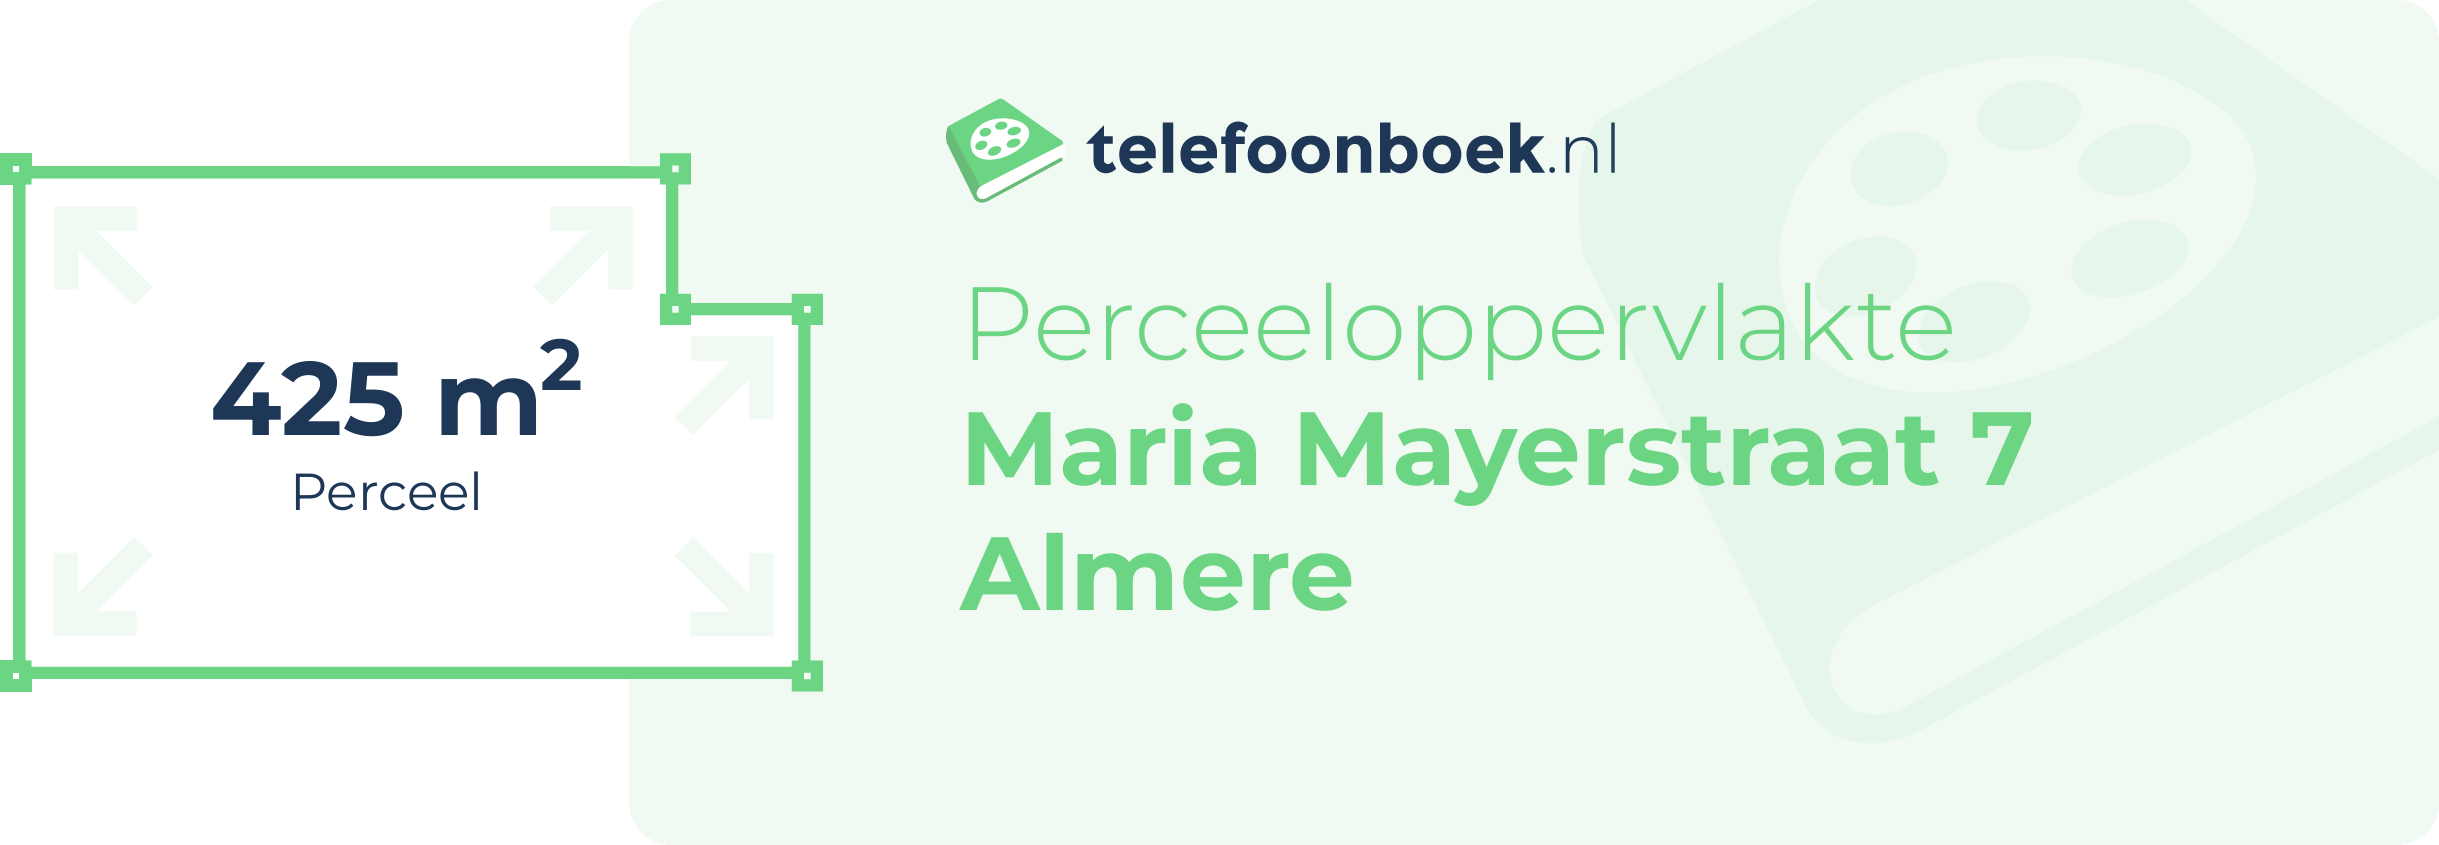 Perceeloppervlakte Maria Mayerstraat 7 Almere